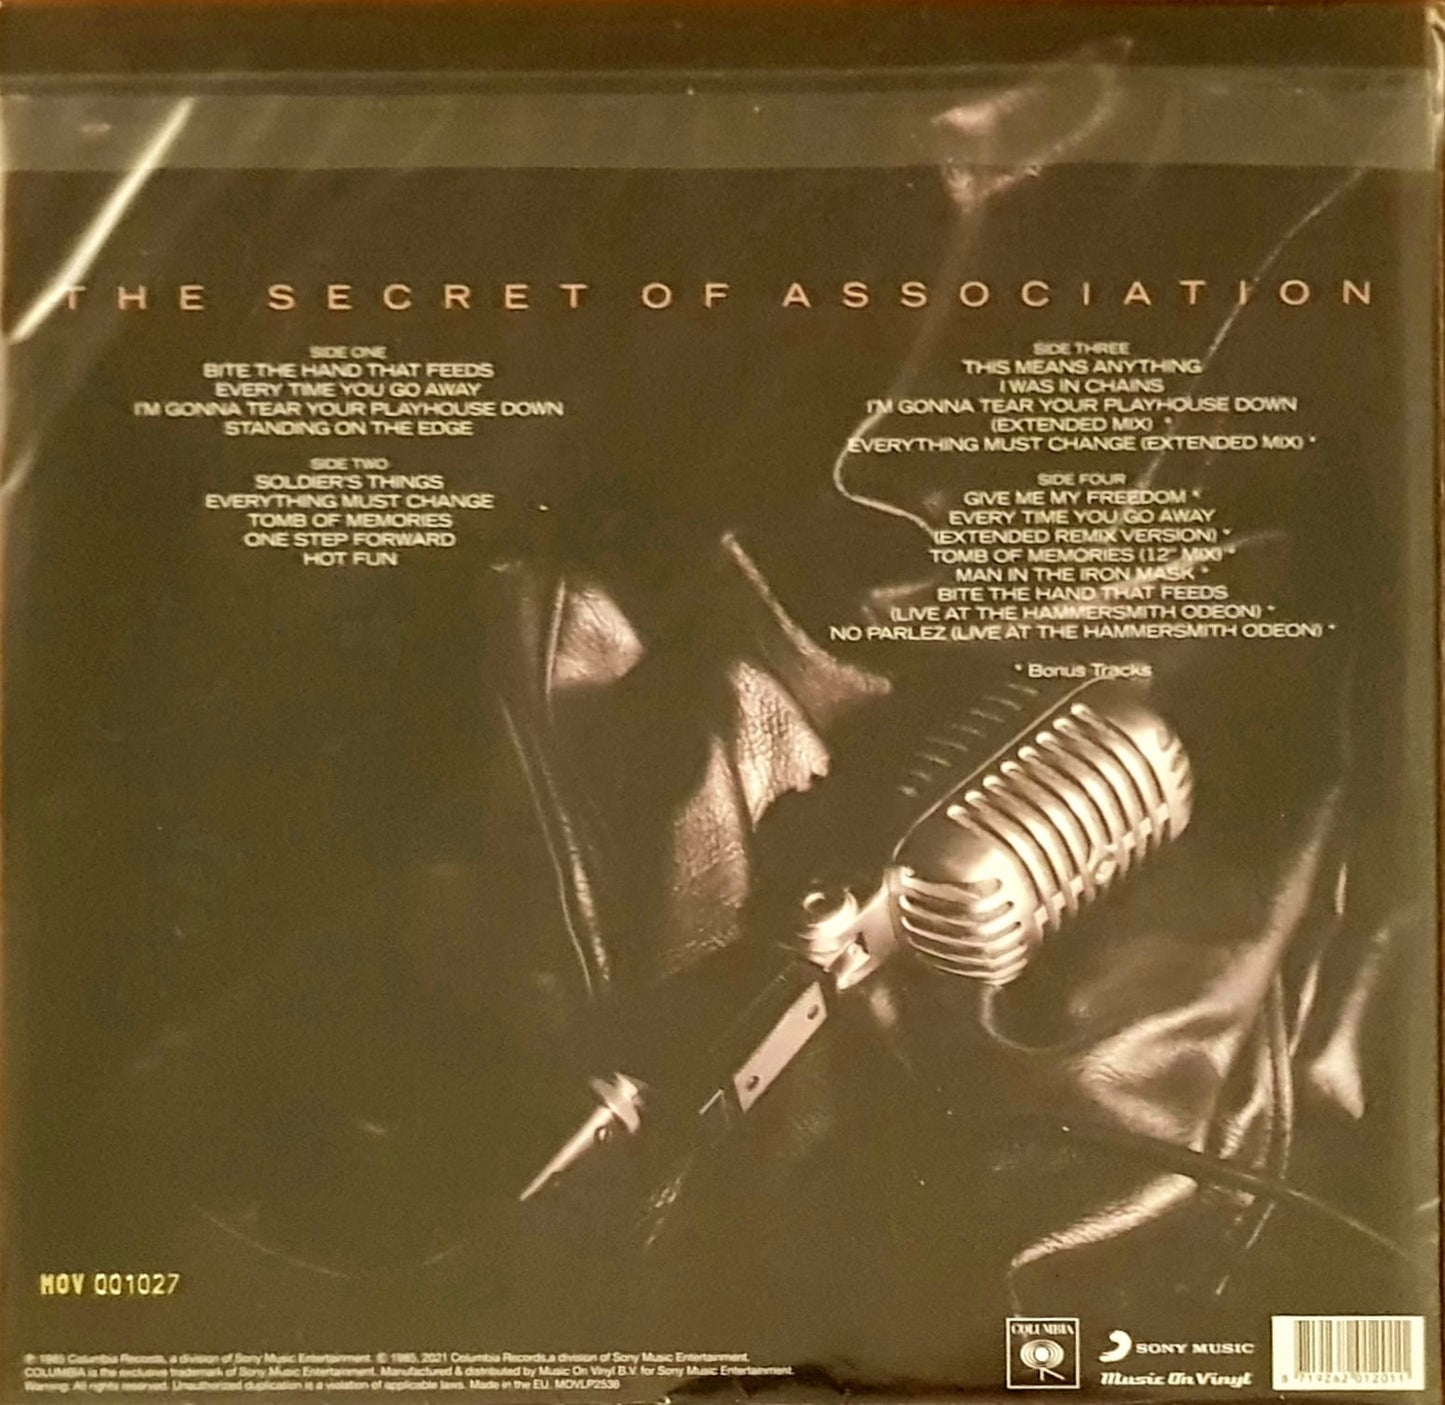 SIGNED Paul Young: The Secret Of Association - Gold/Black Vinyl Bundle